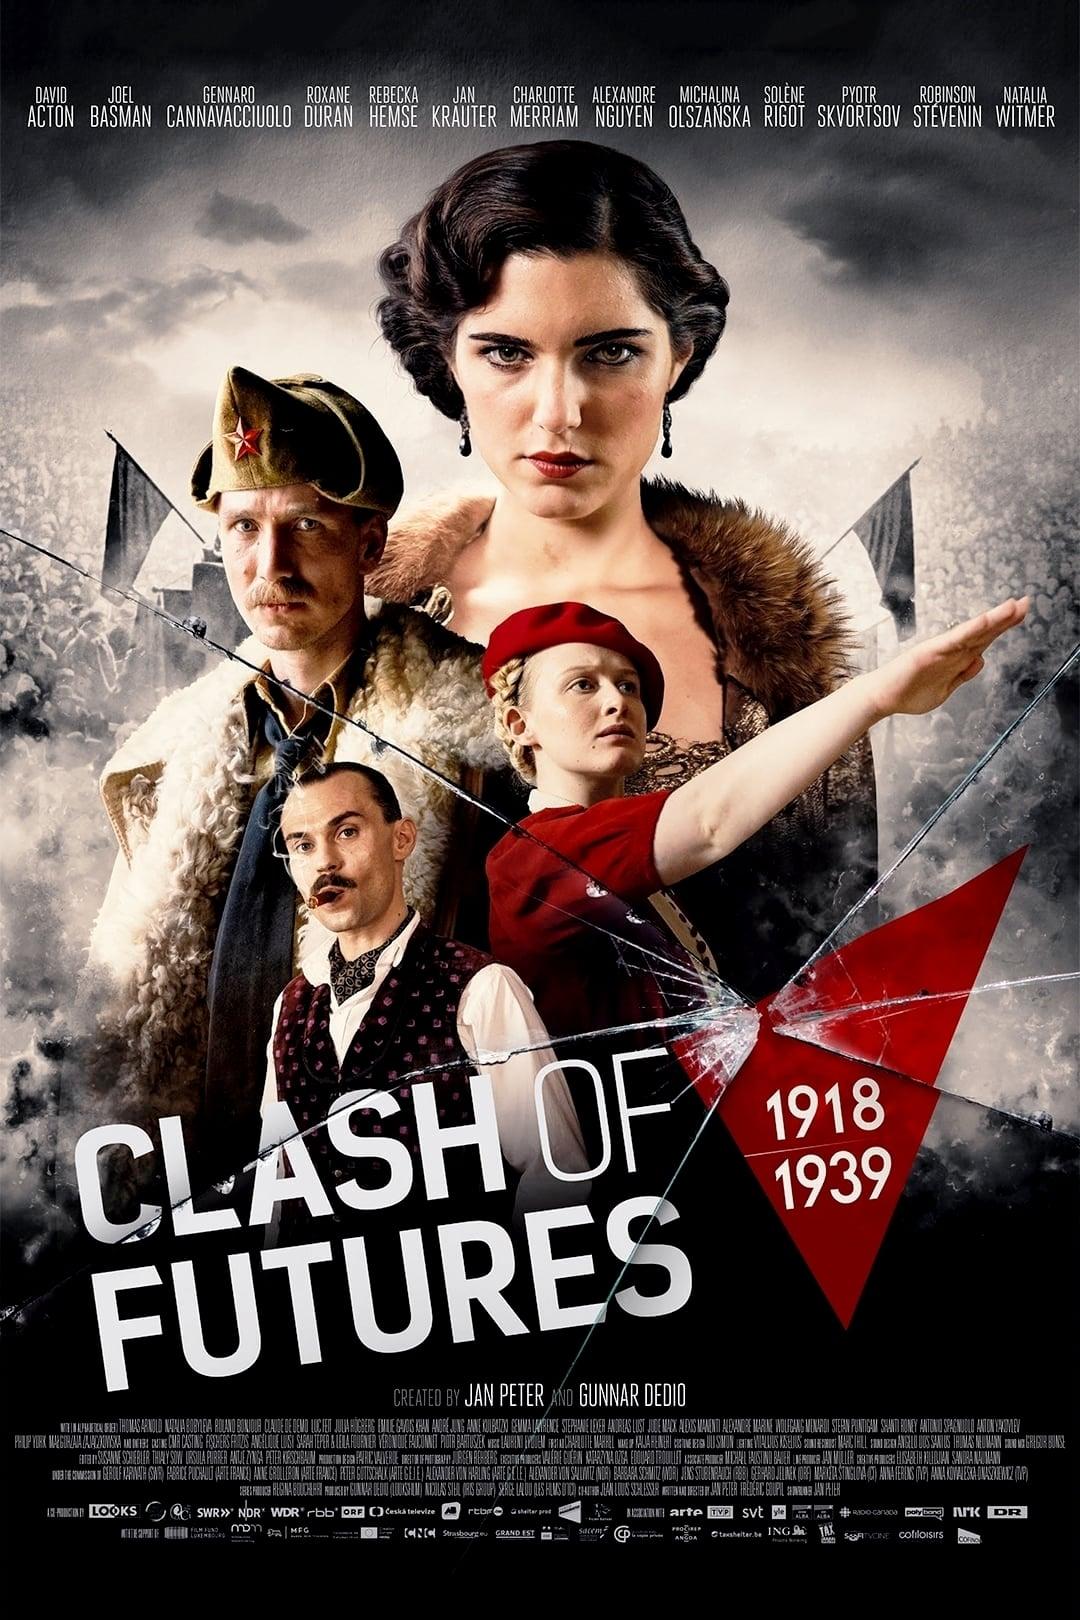 Clash of Futures (1918-1939) poster